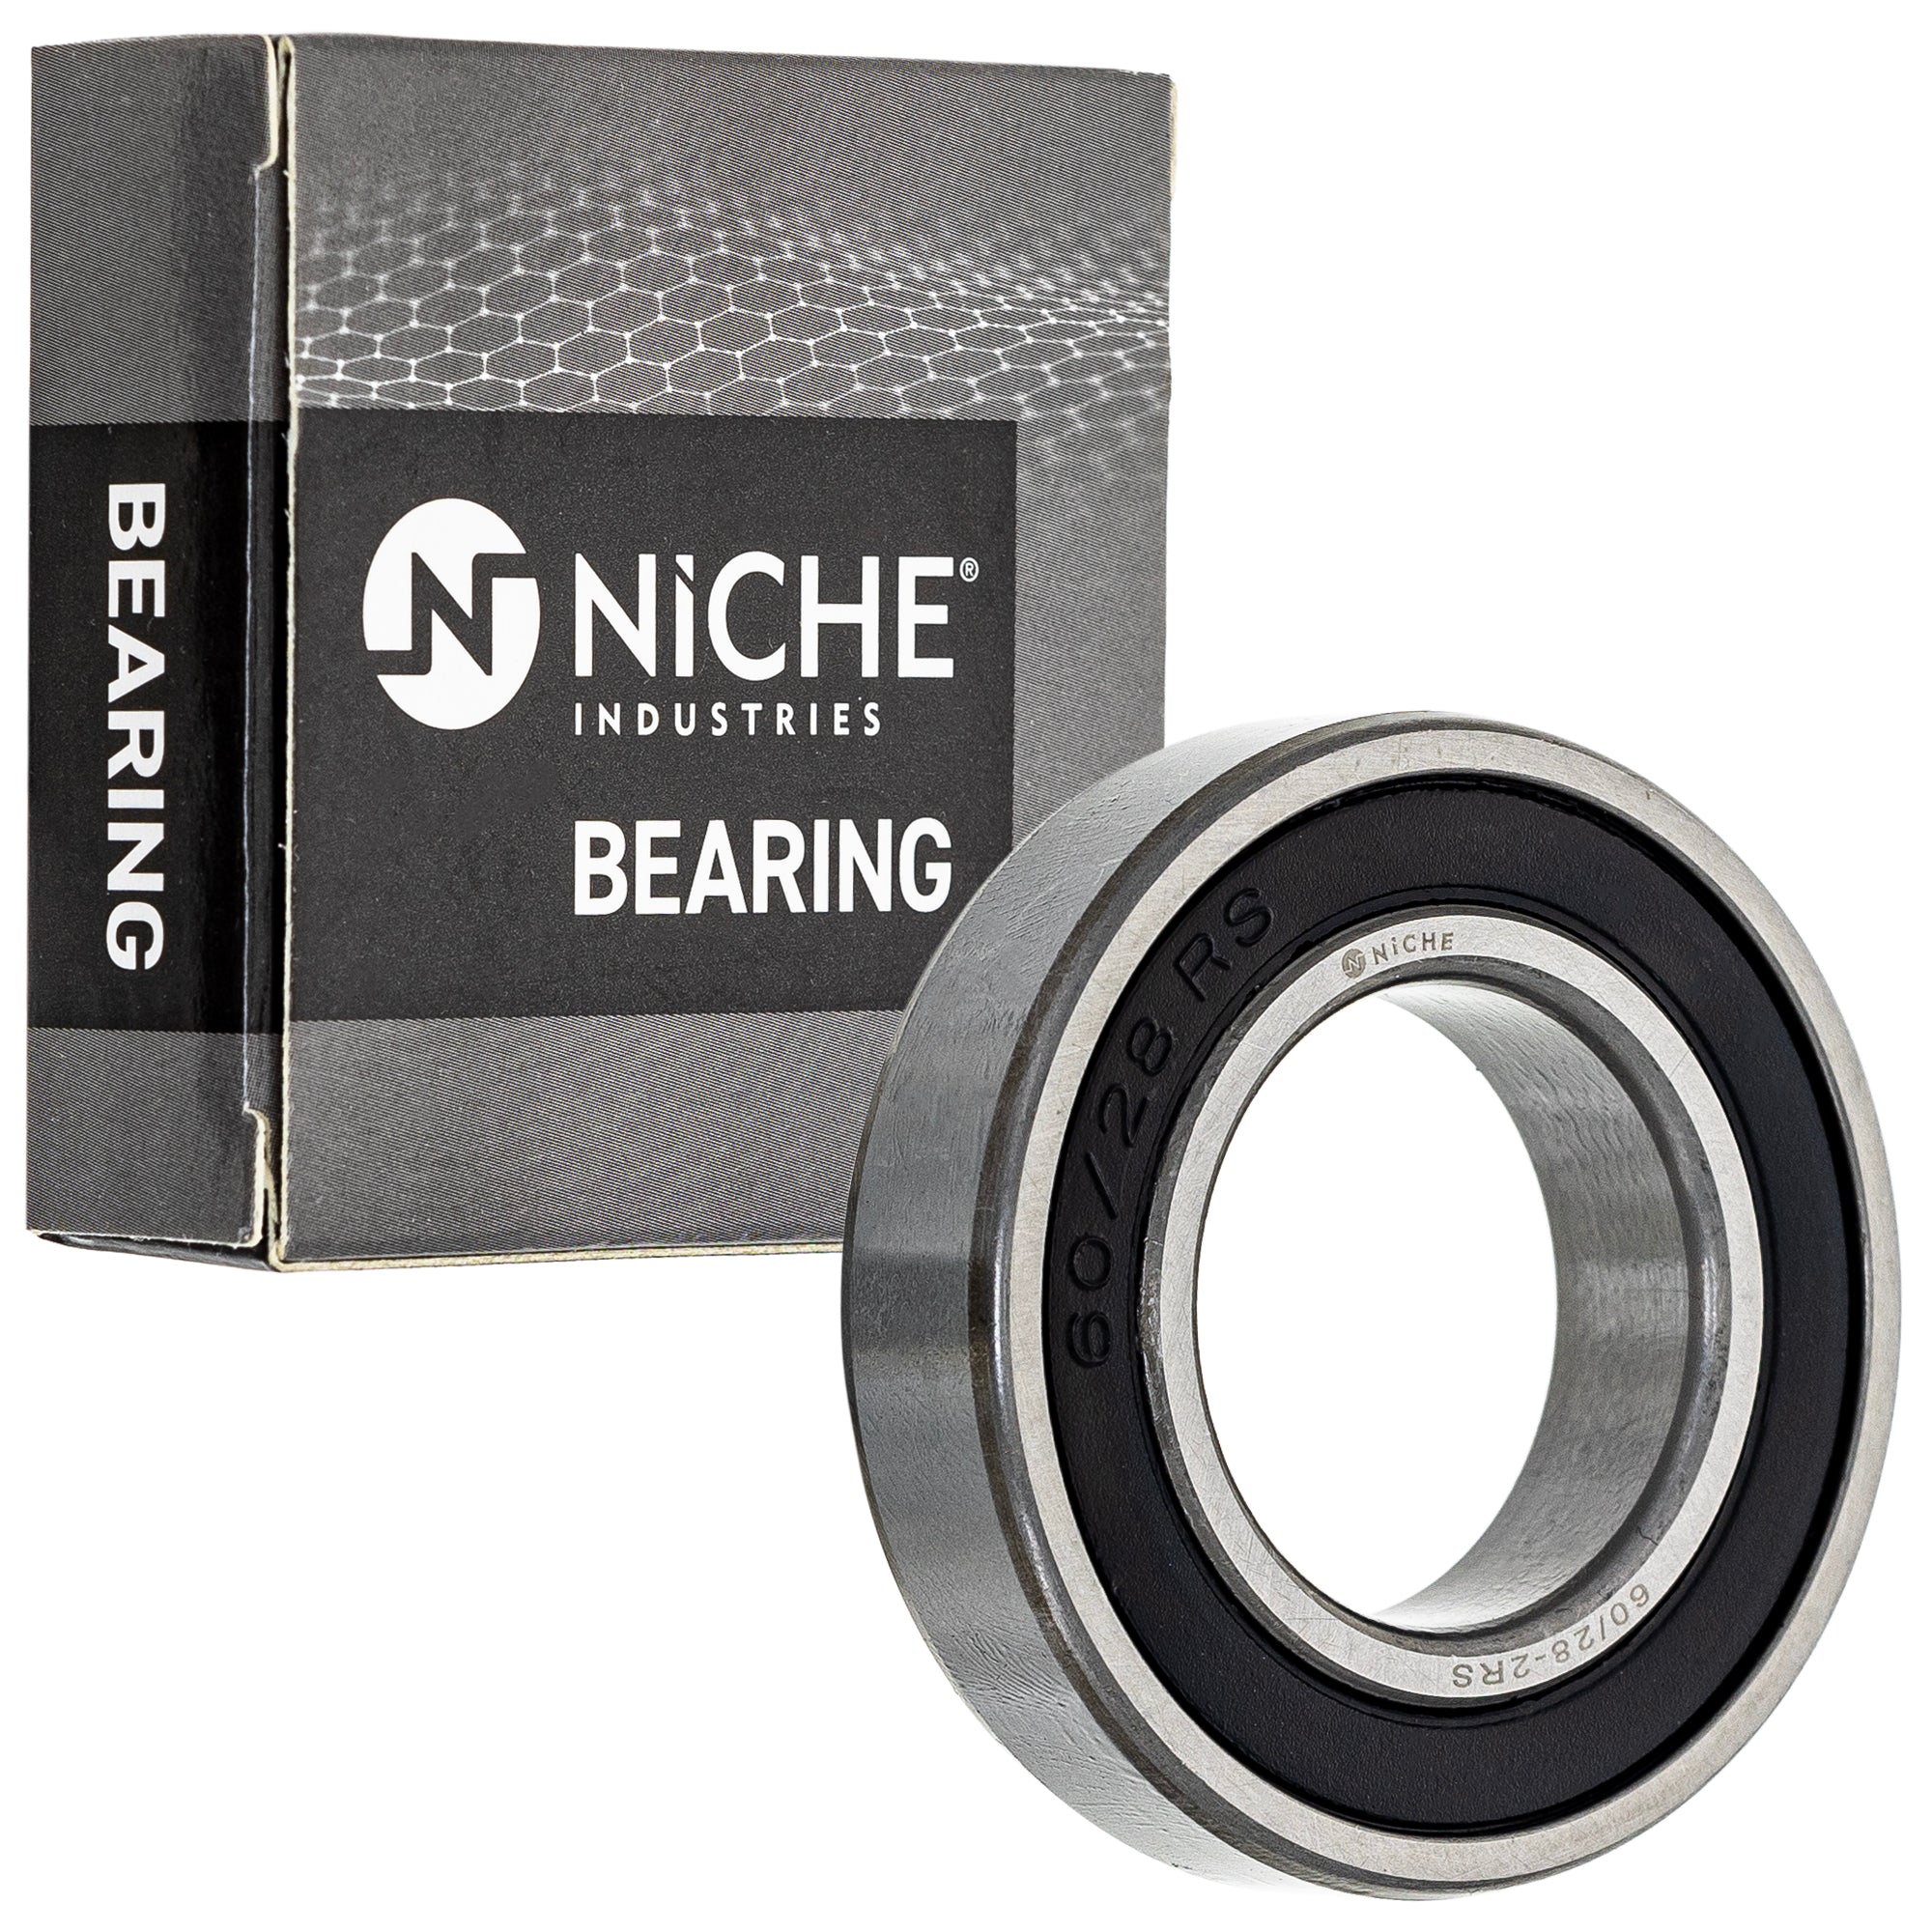 NICHE 519-CBB2264R Bearing & Seal Kit for zOTHER Stateline Sabre